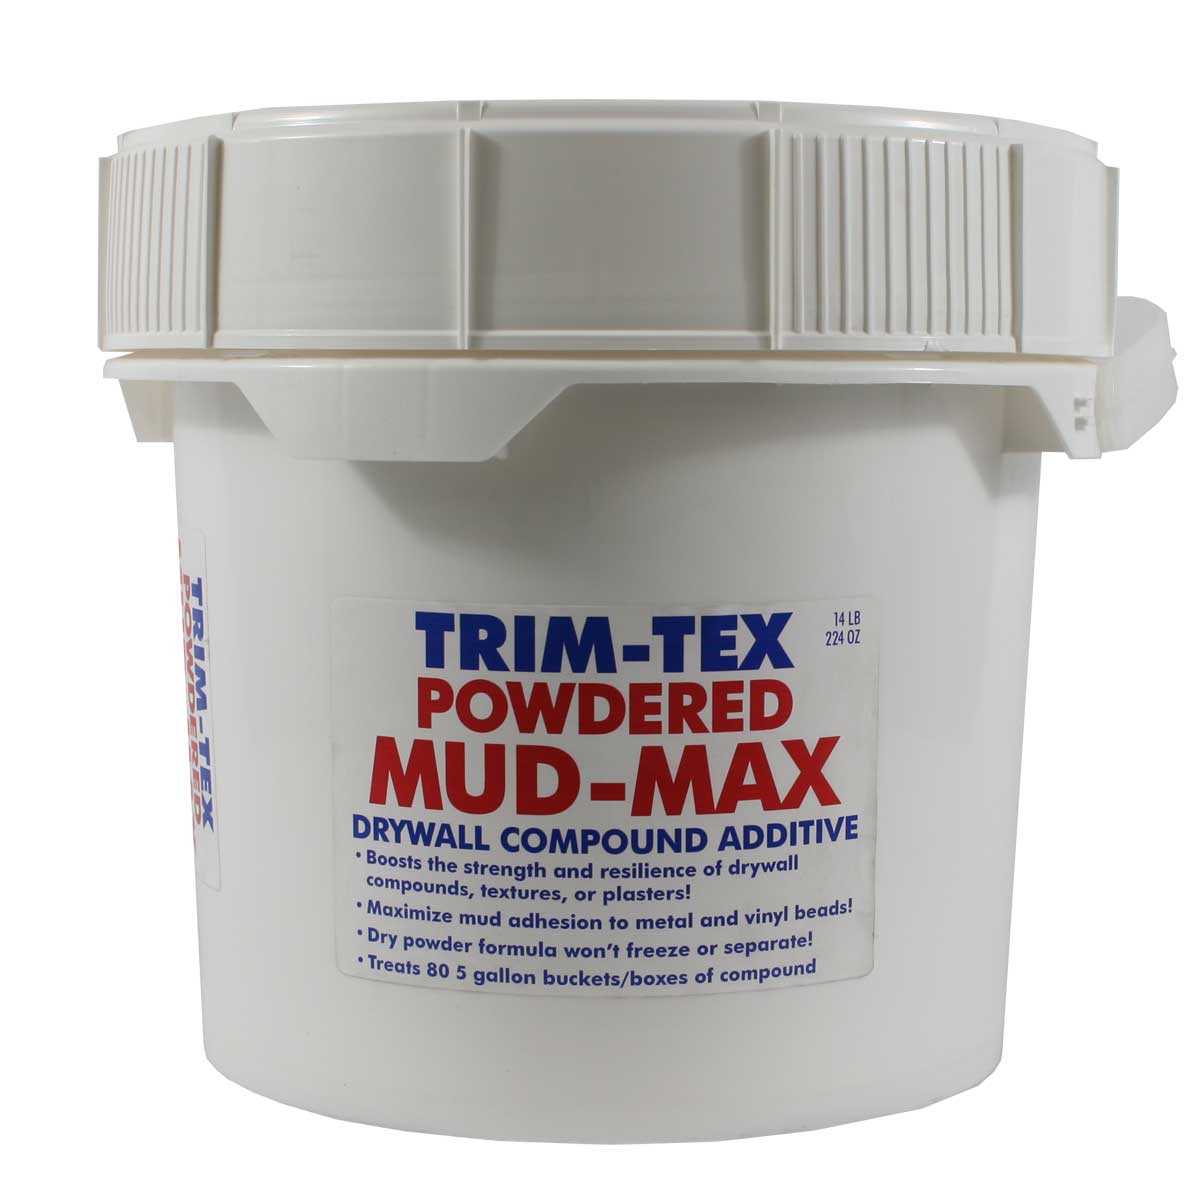 Trim-Tex Powdered Mud-Max